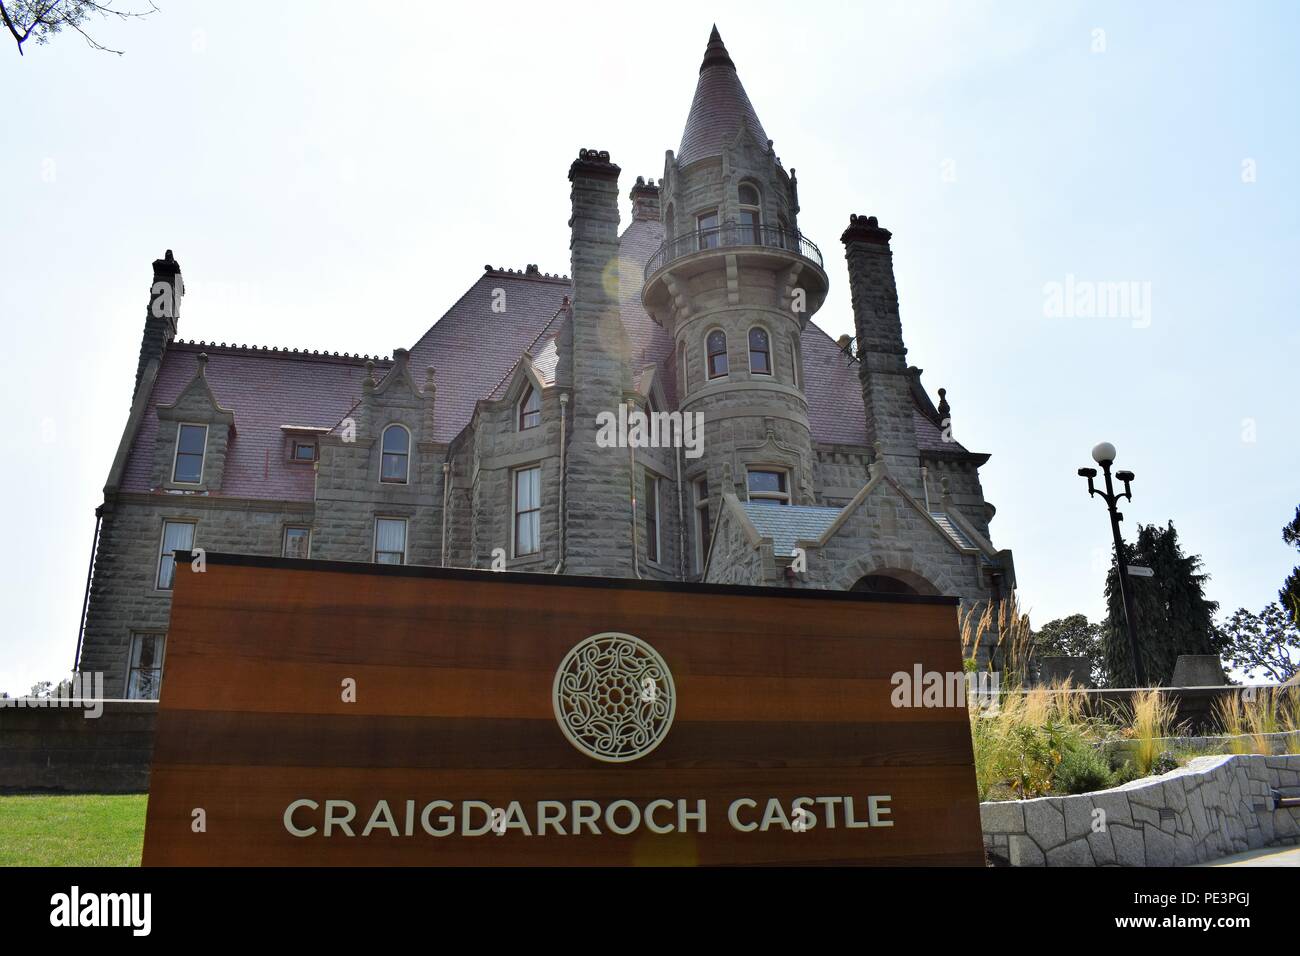 Craigdarroch castle front entrance Stock Photo